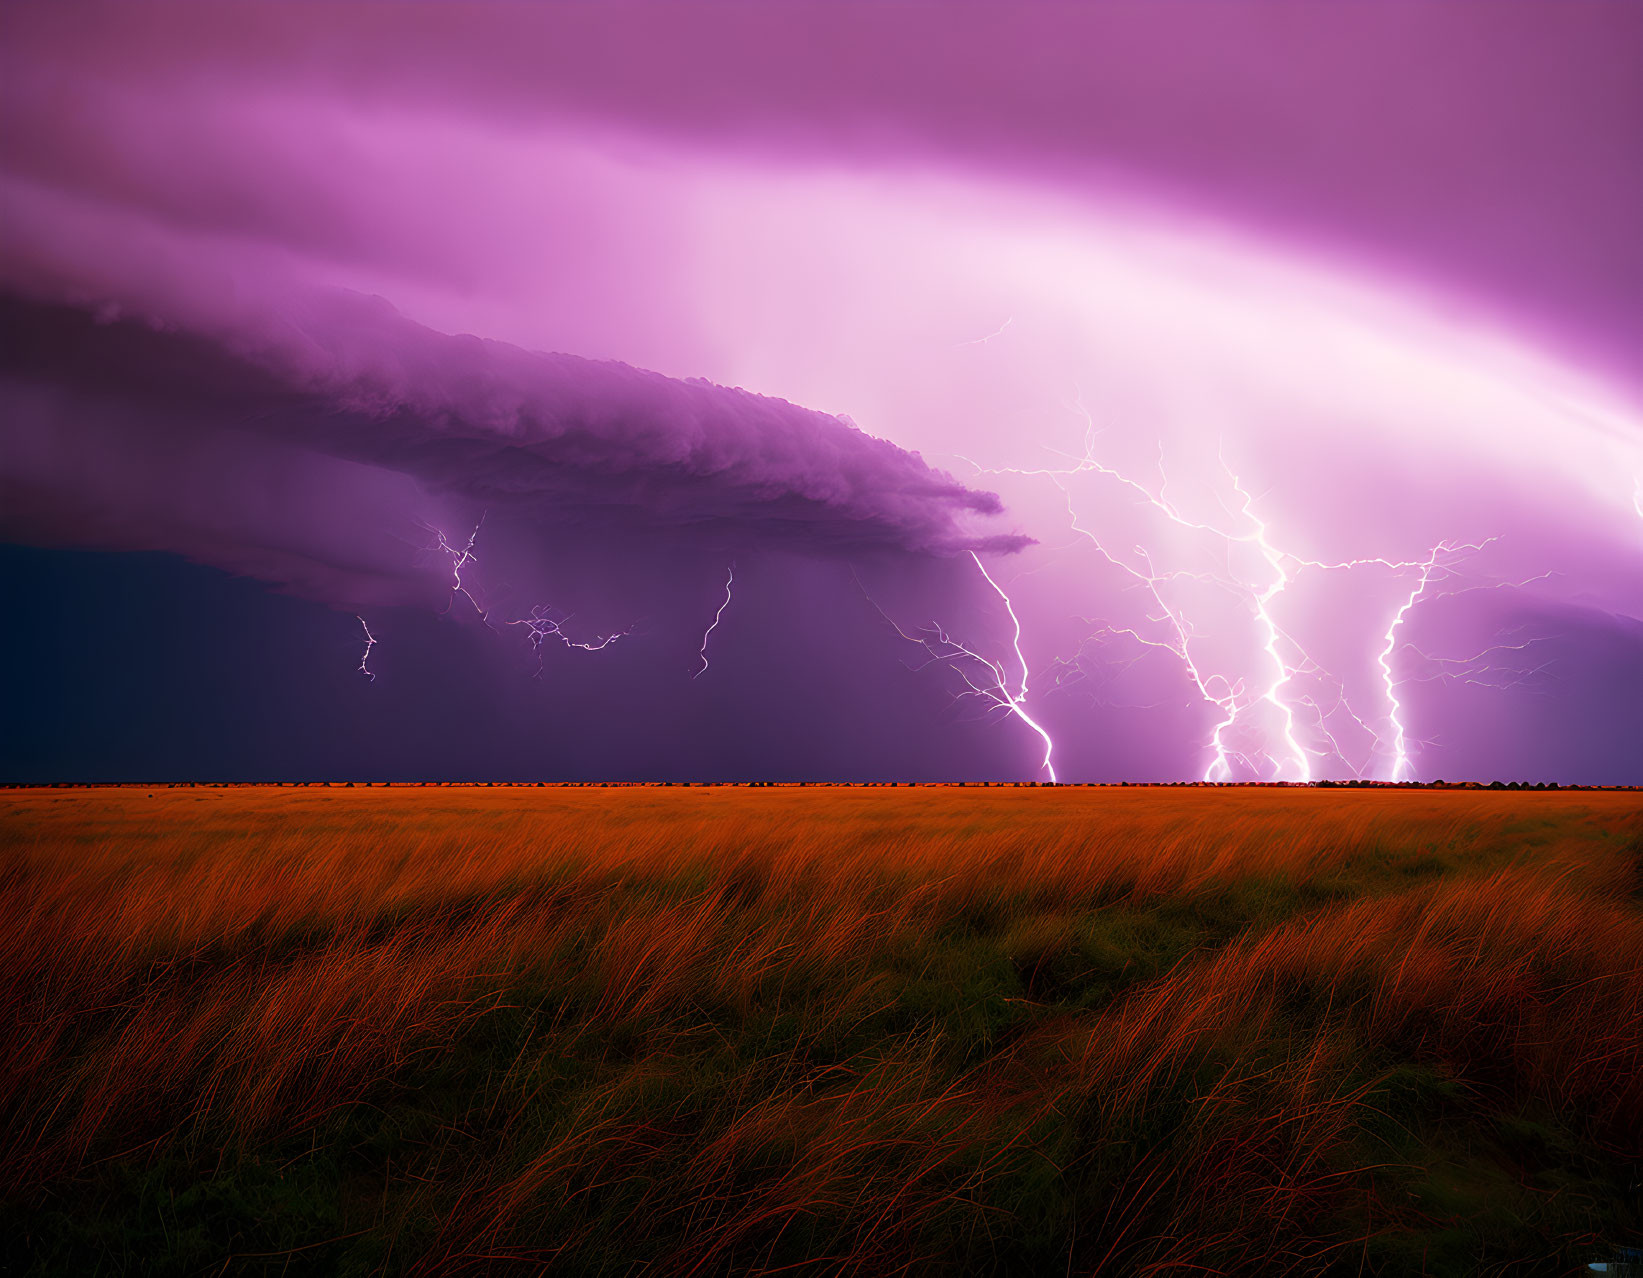 Vibrant Purple Skies and Lightning Strikes Over Golden Field